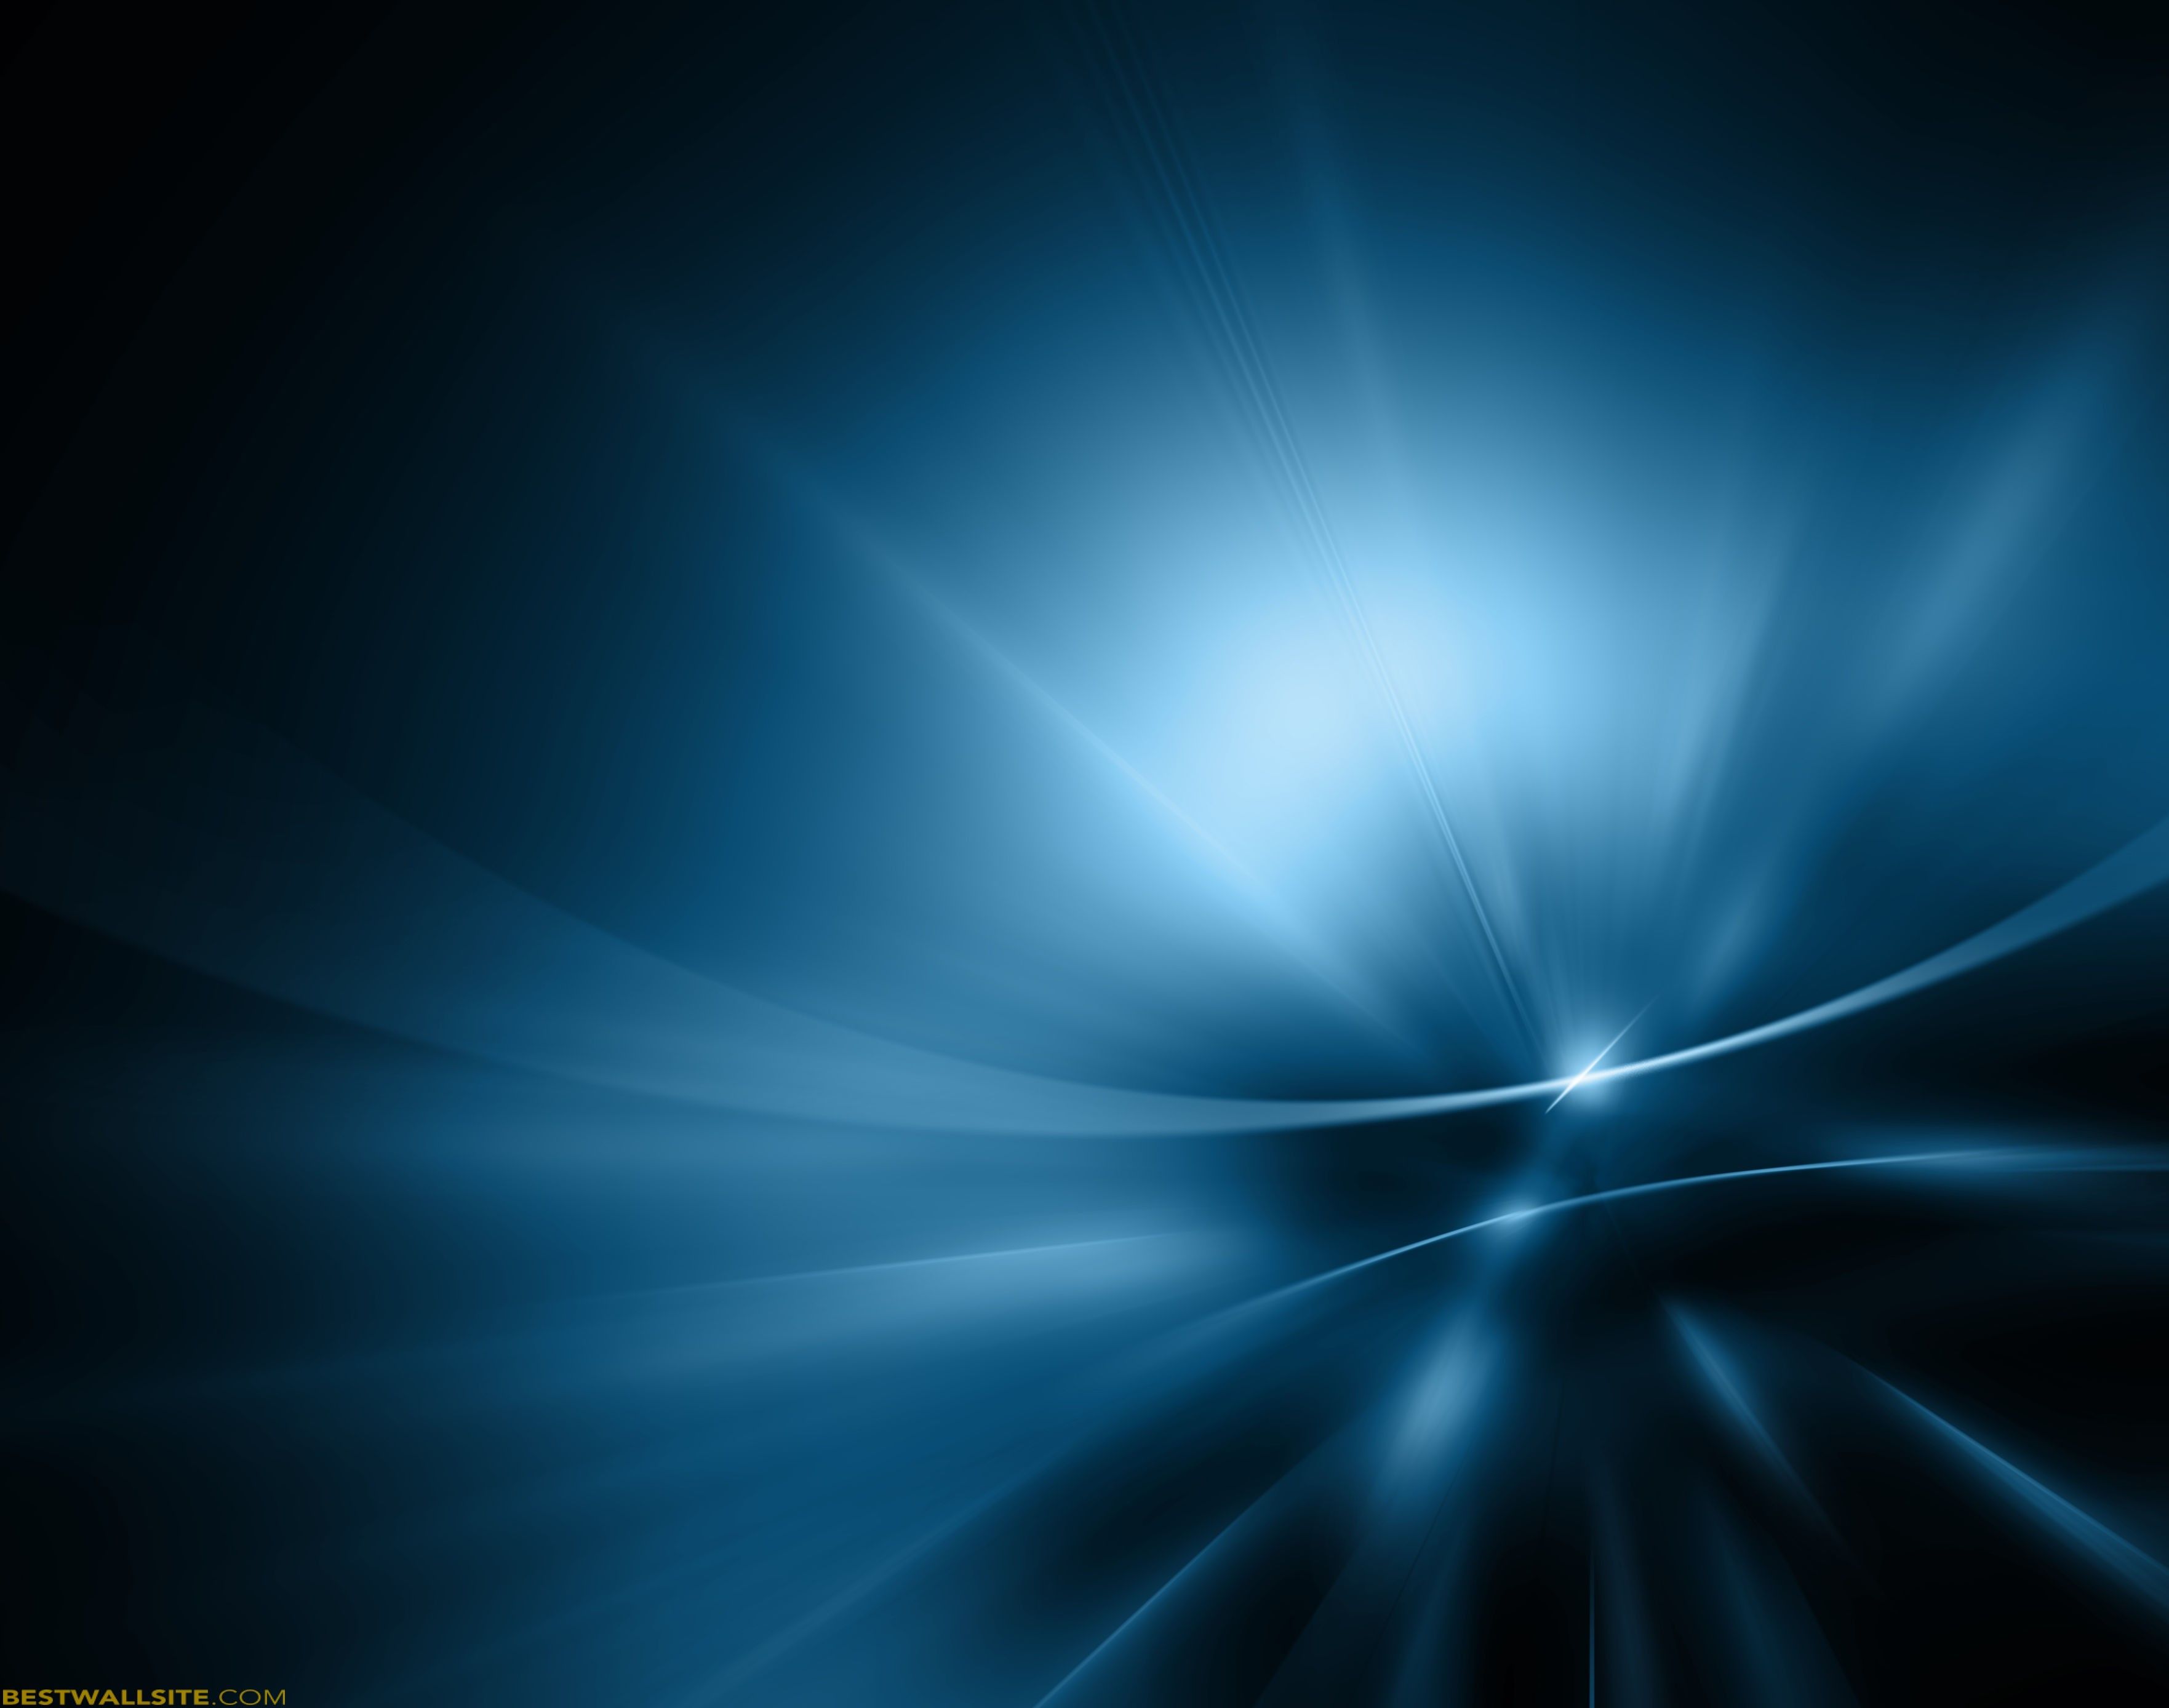 Abstract Desktop Background Blue | BestWallSite.com